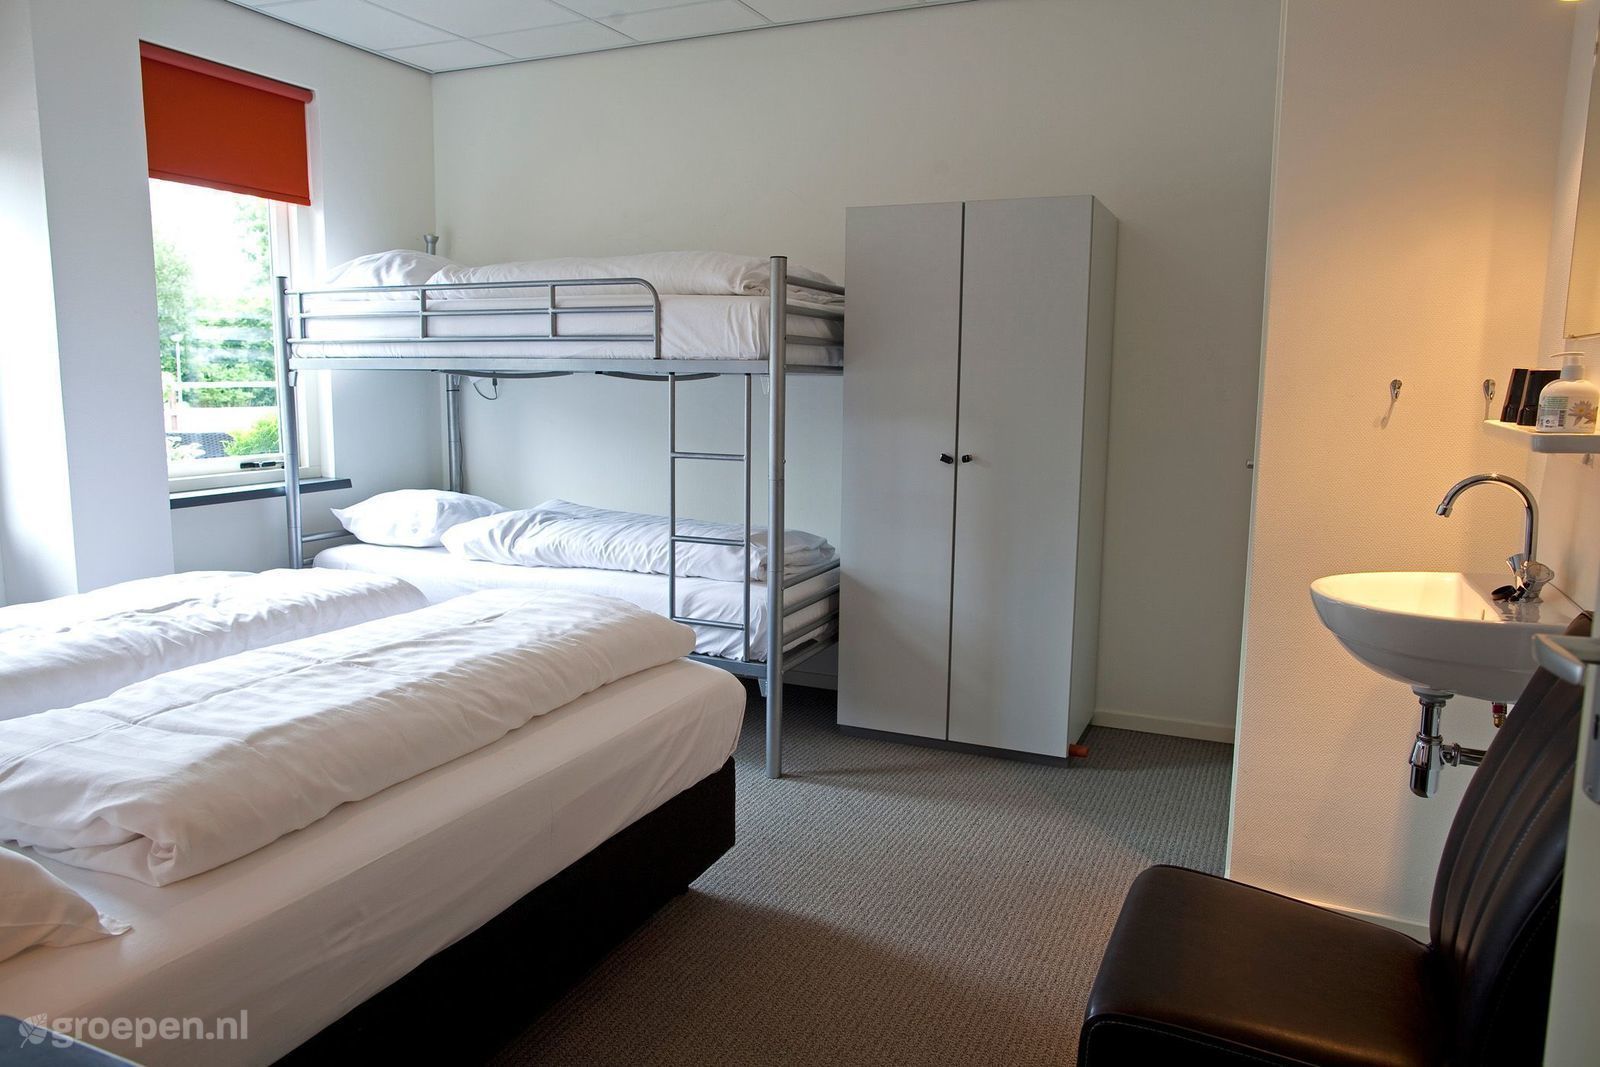 Group accommodation Hollandscheveld